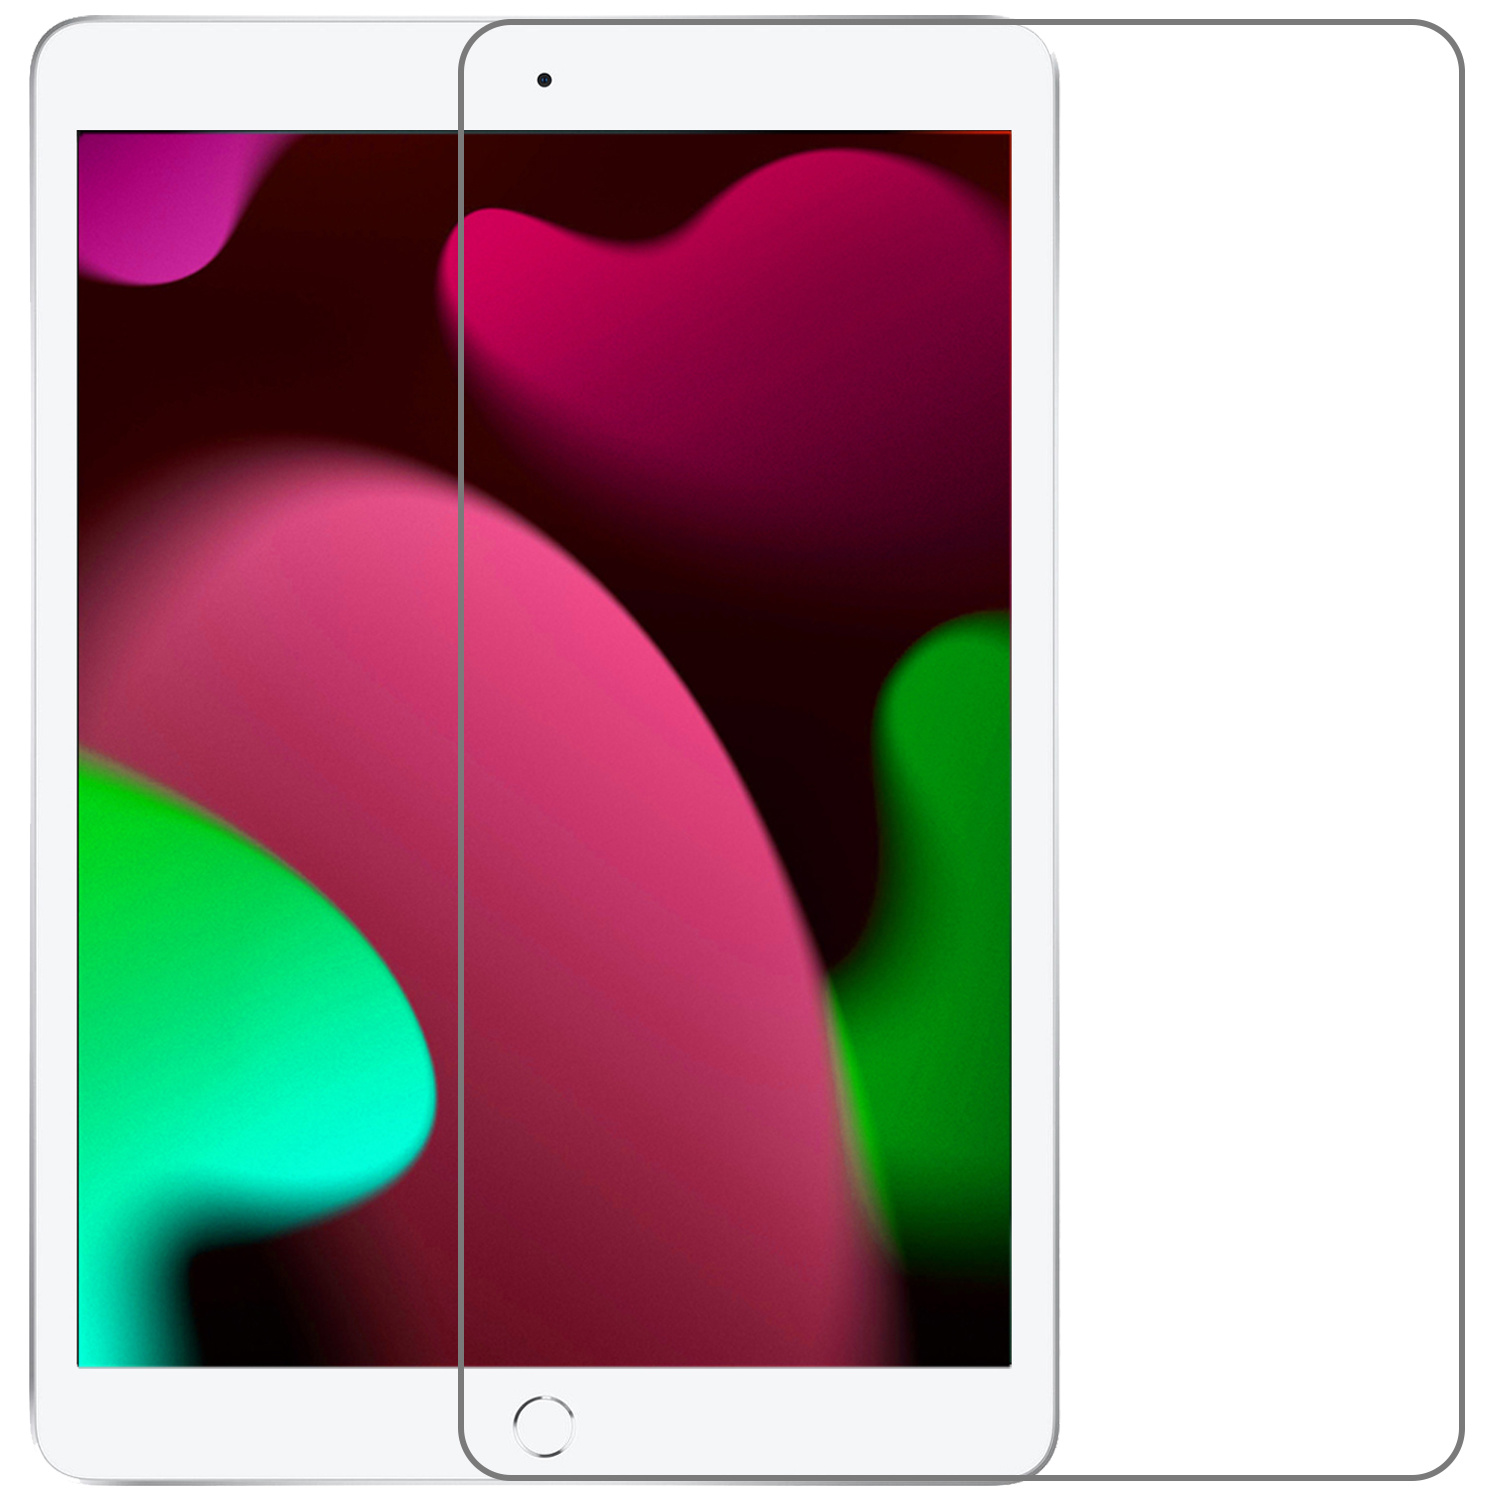 Nomfy iPad 10.2 2021 Screenprotector Bescherm Glas - iPad 10.2 2021 Screen Protector Tempered Glass - 2 Stuks